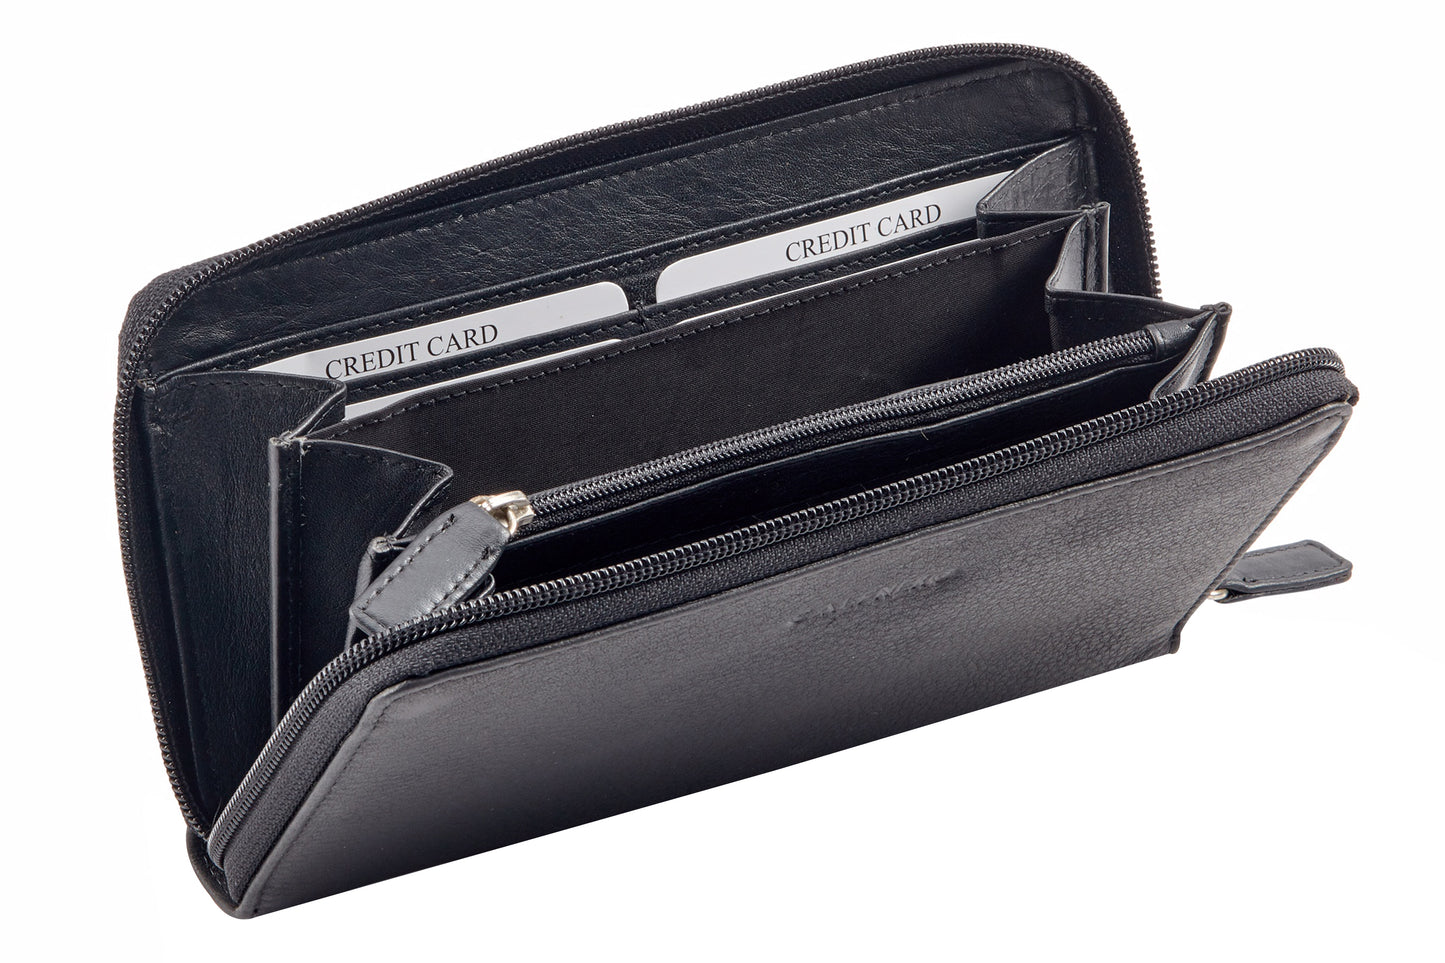 Calfnero Genuine Leather Women's Wallet (270312-black)